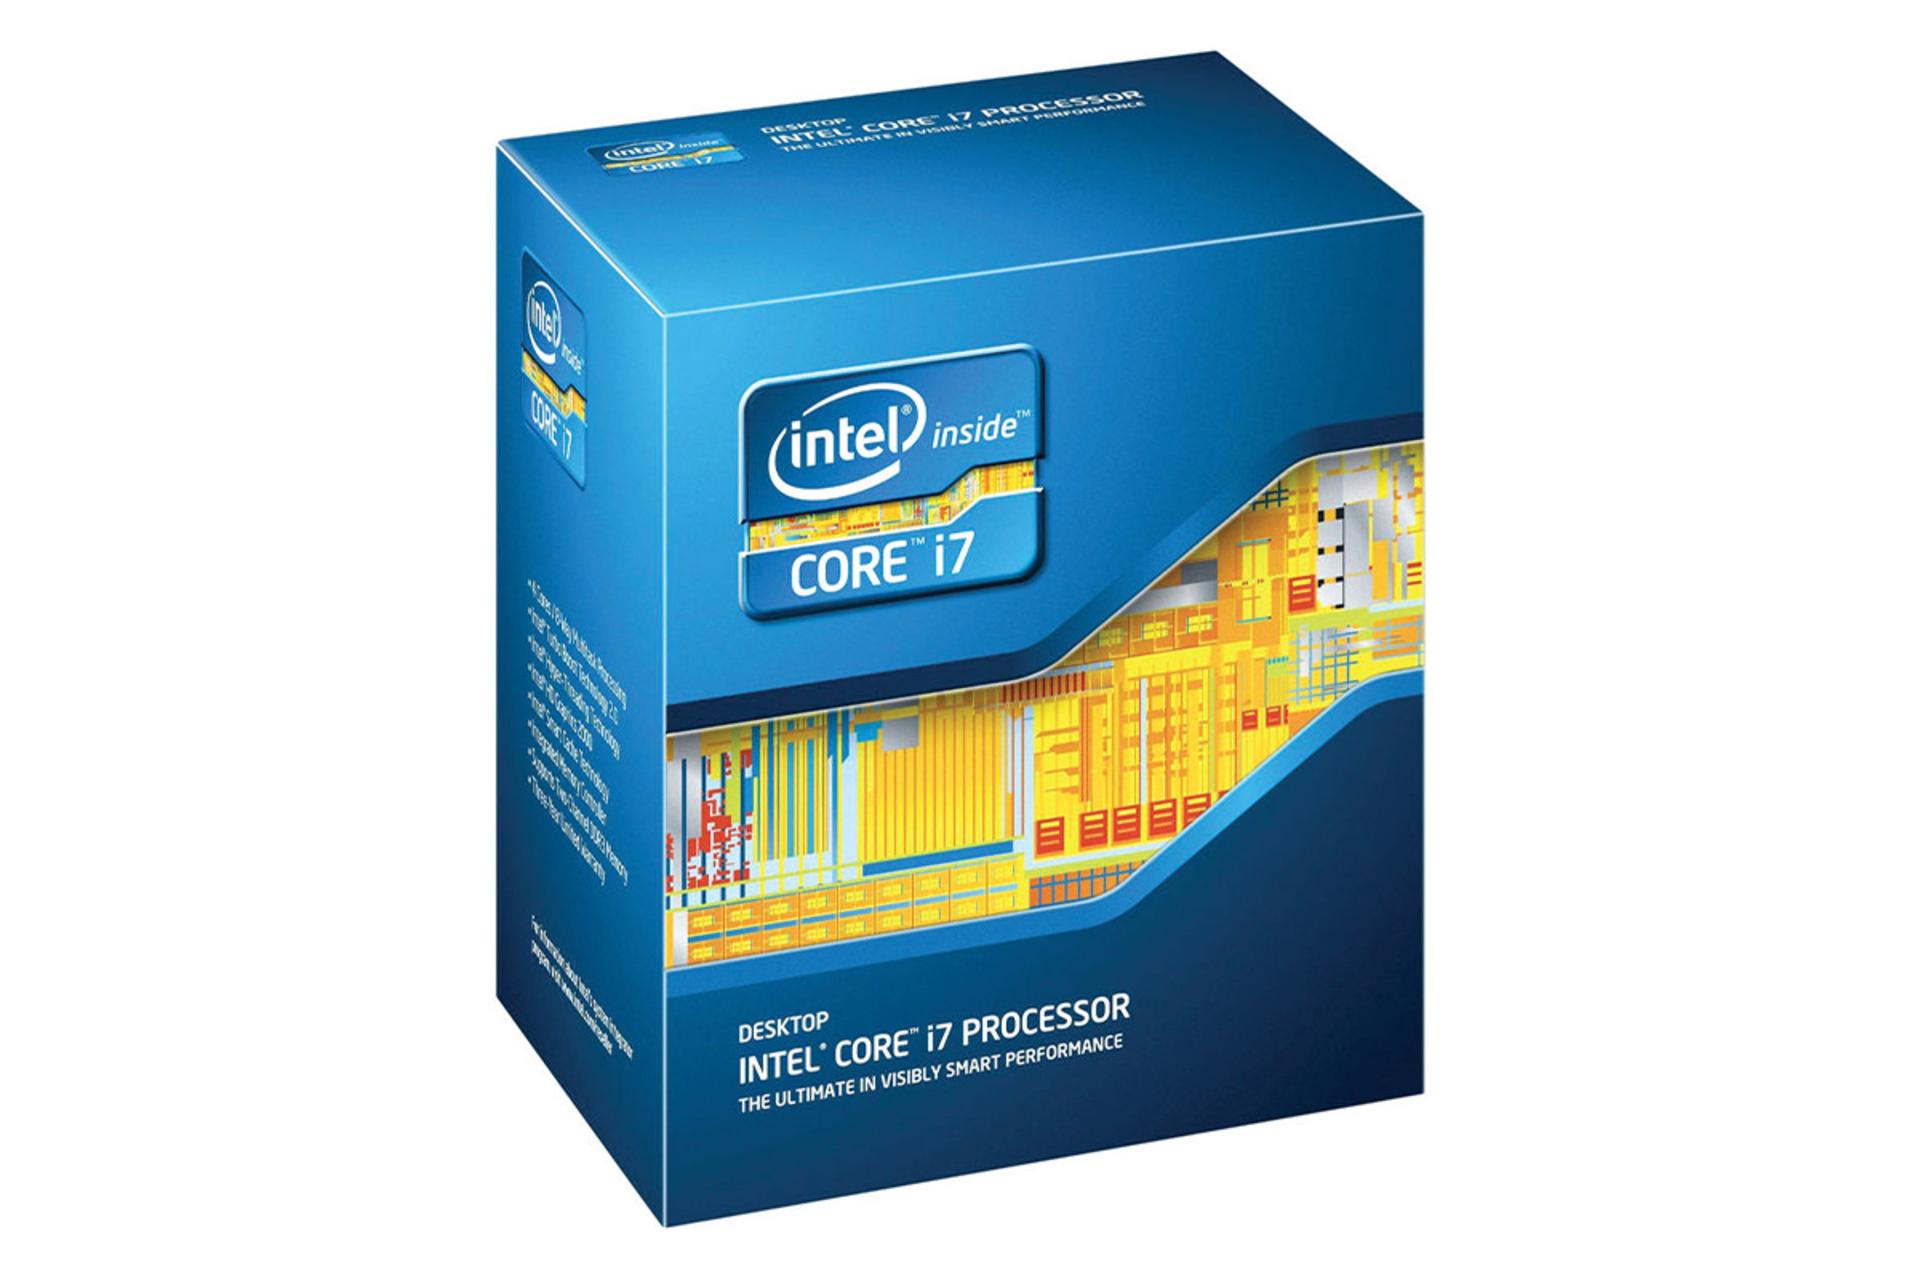 اینتل Core i7-4771 / Intel Core i7-4771